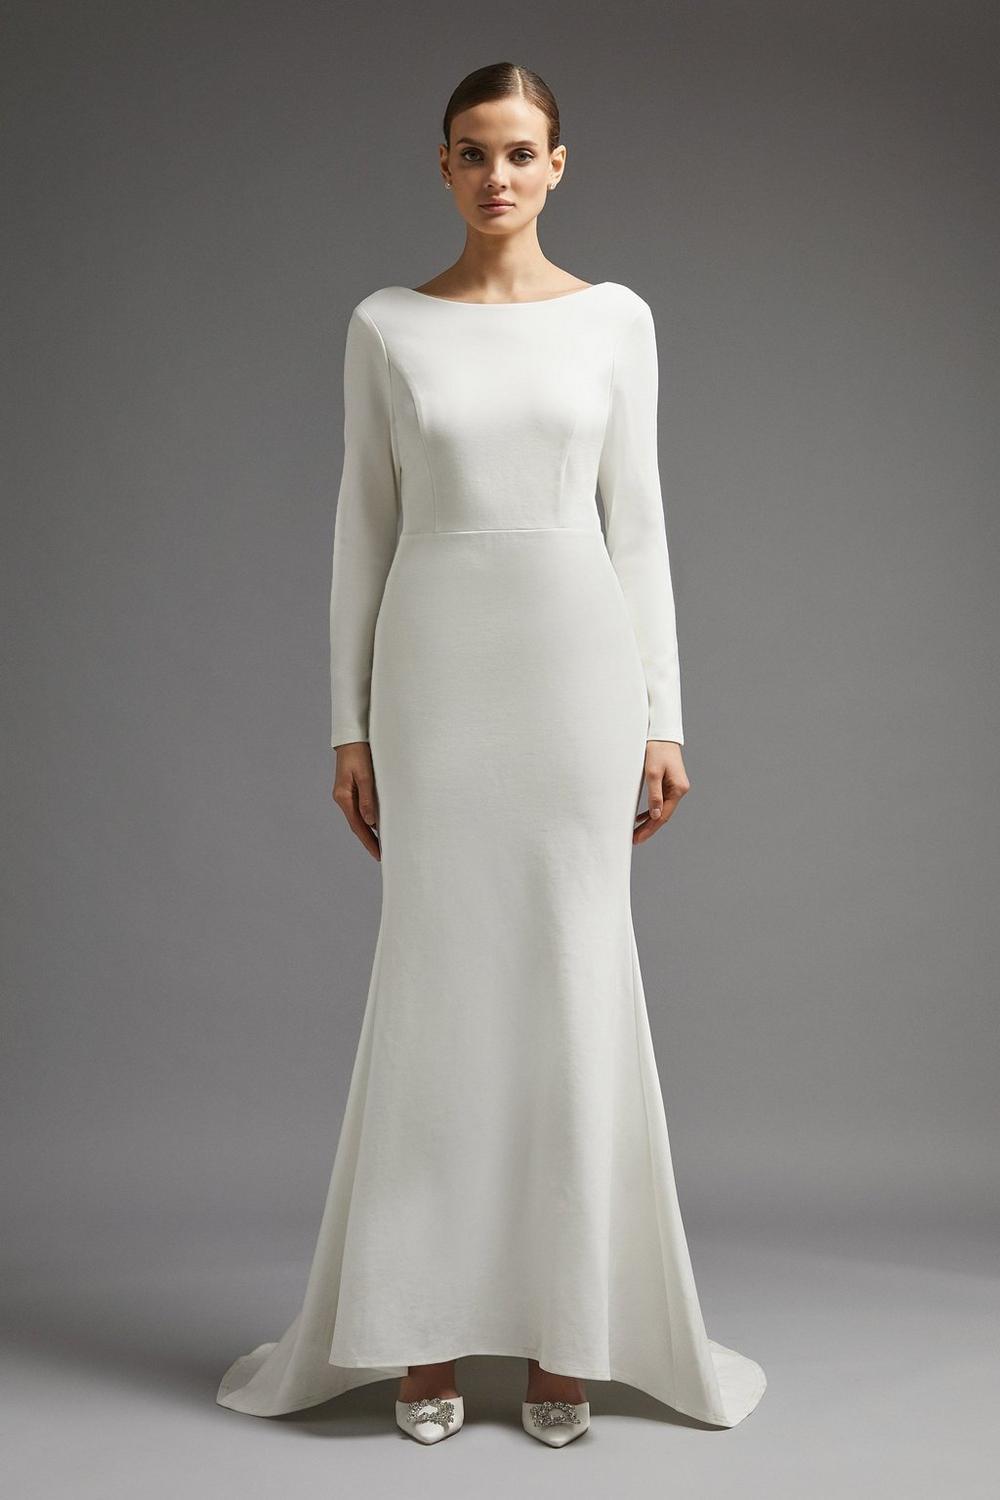 Model wearing a sleek long sleeved wedding dress